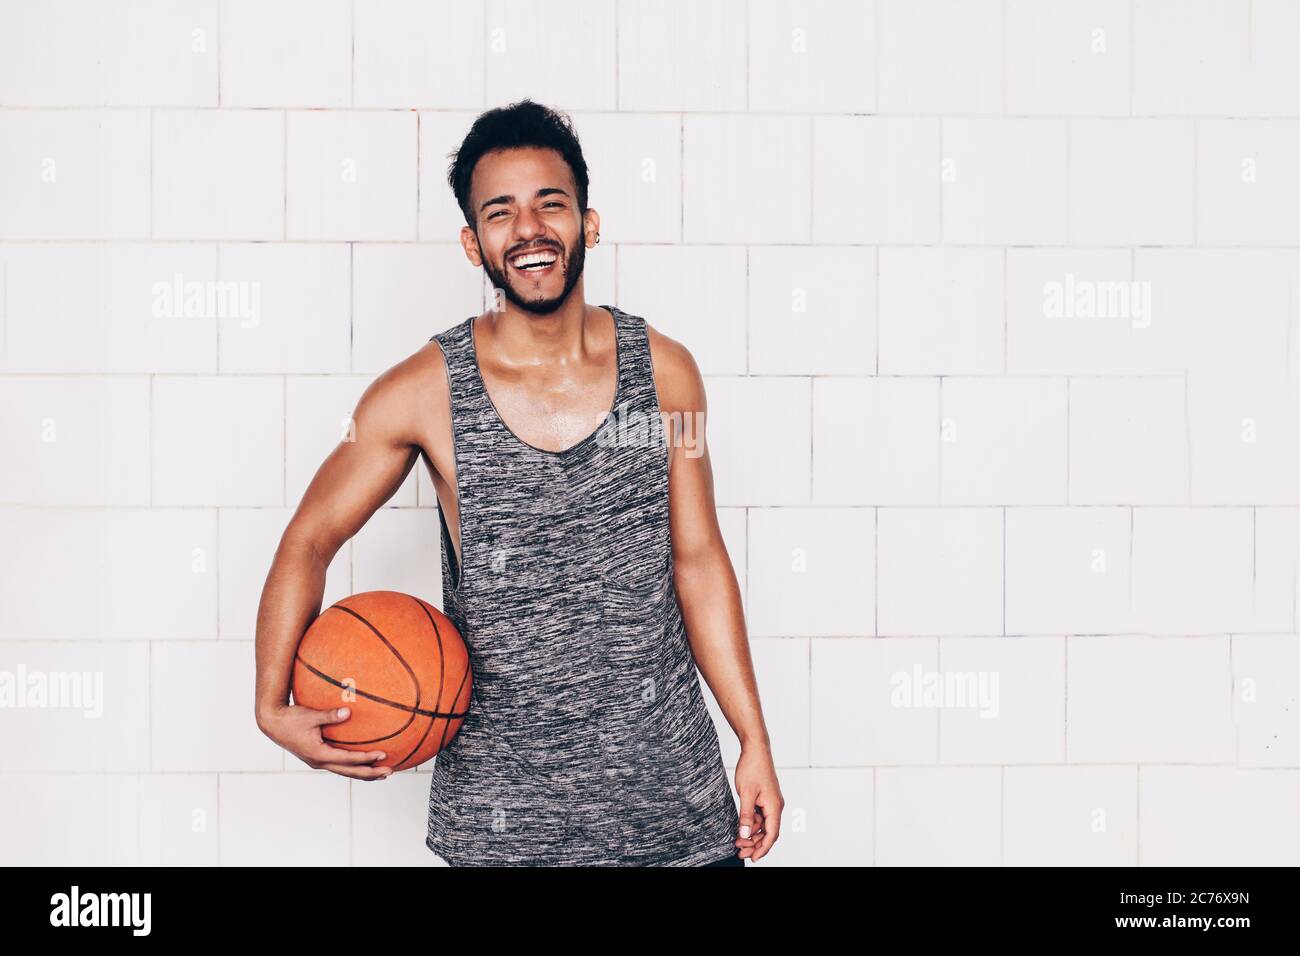 Junger Mann hält einen Basketball, während er lächelt Stockfoto